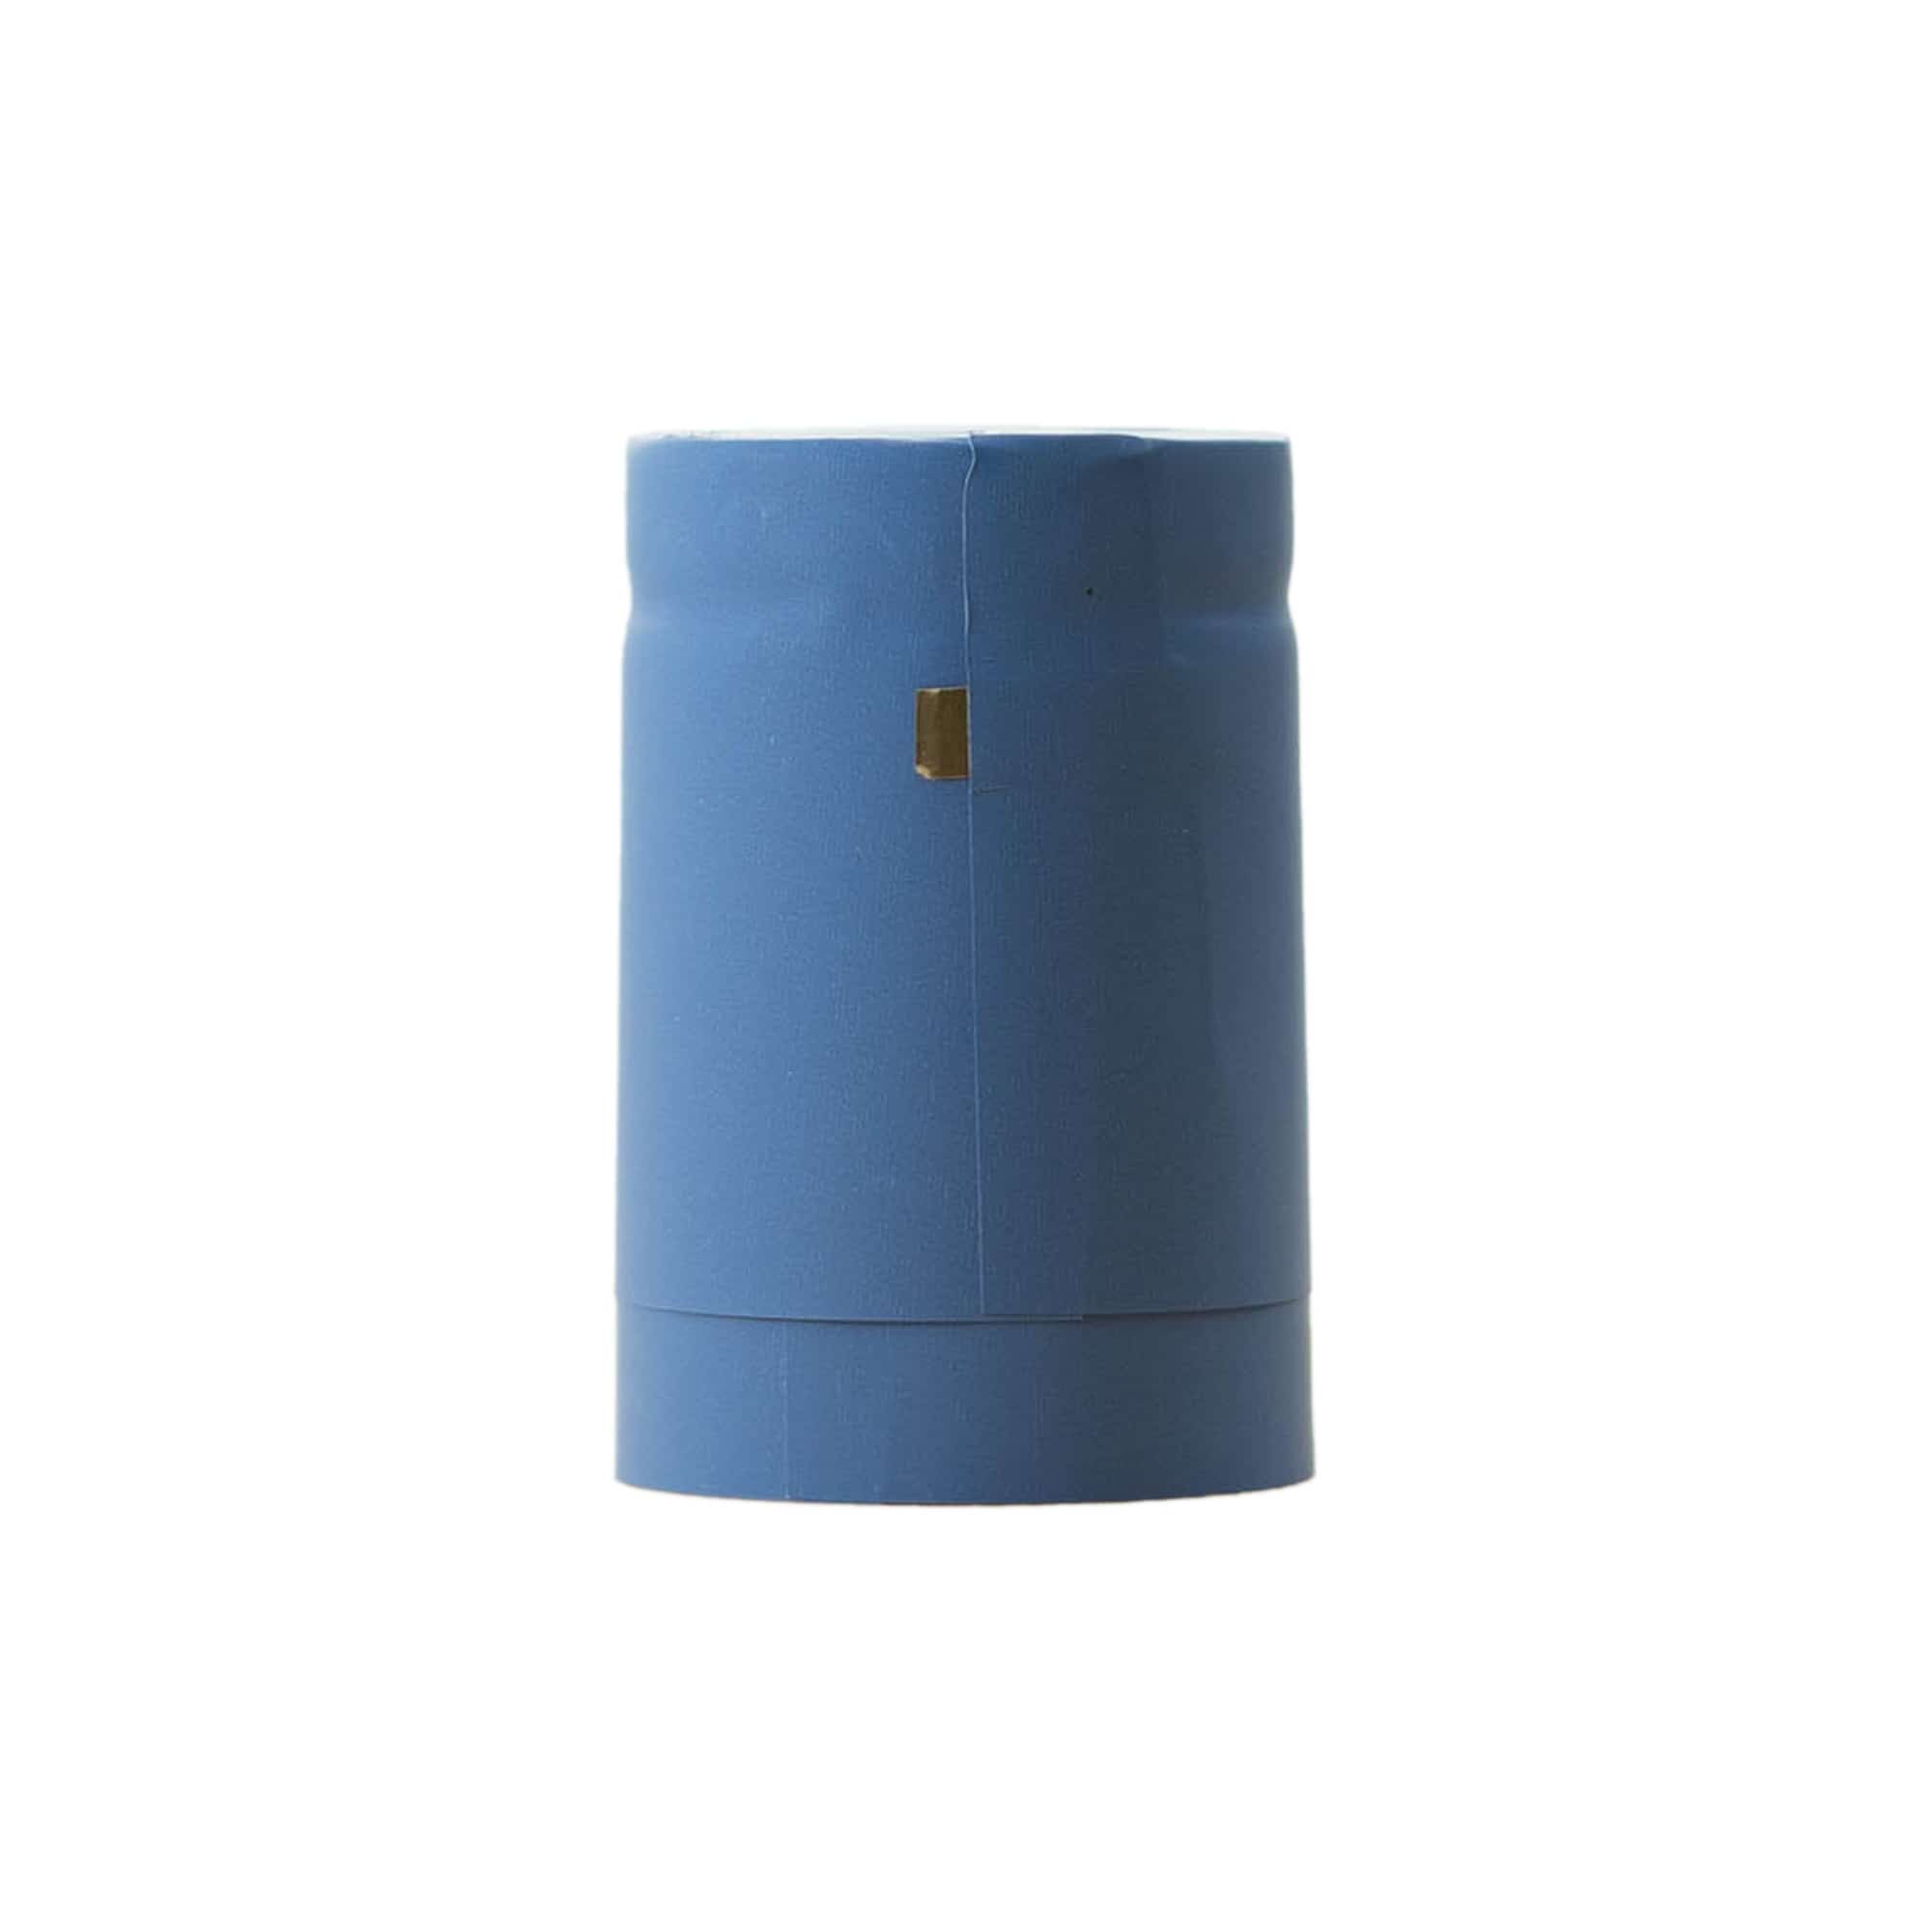 Krimpcapsule 32x41, pvc-kunststof, hemelsblauw